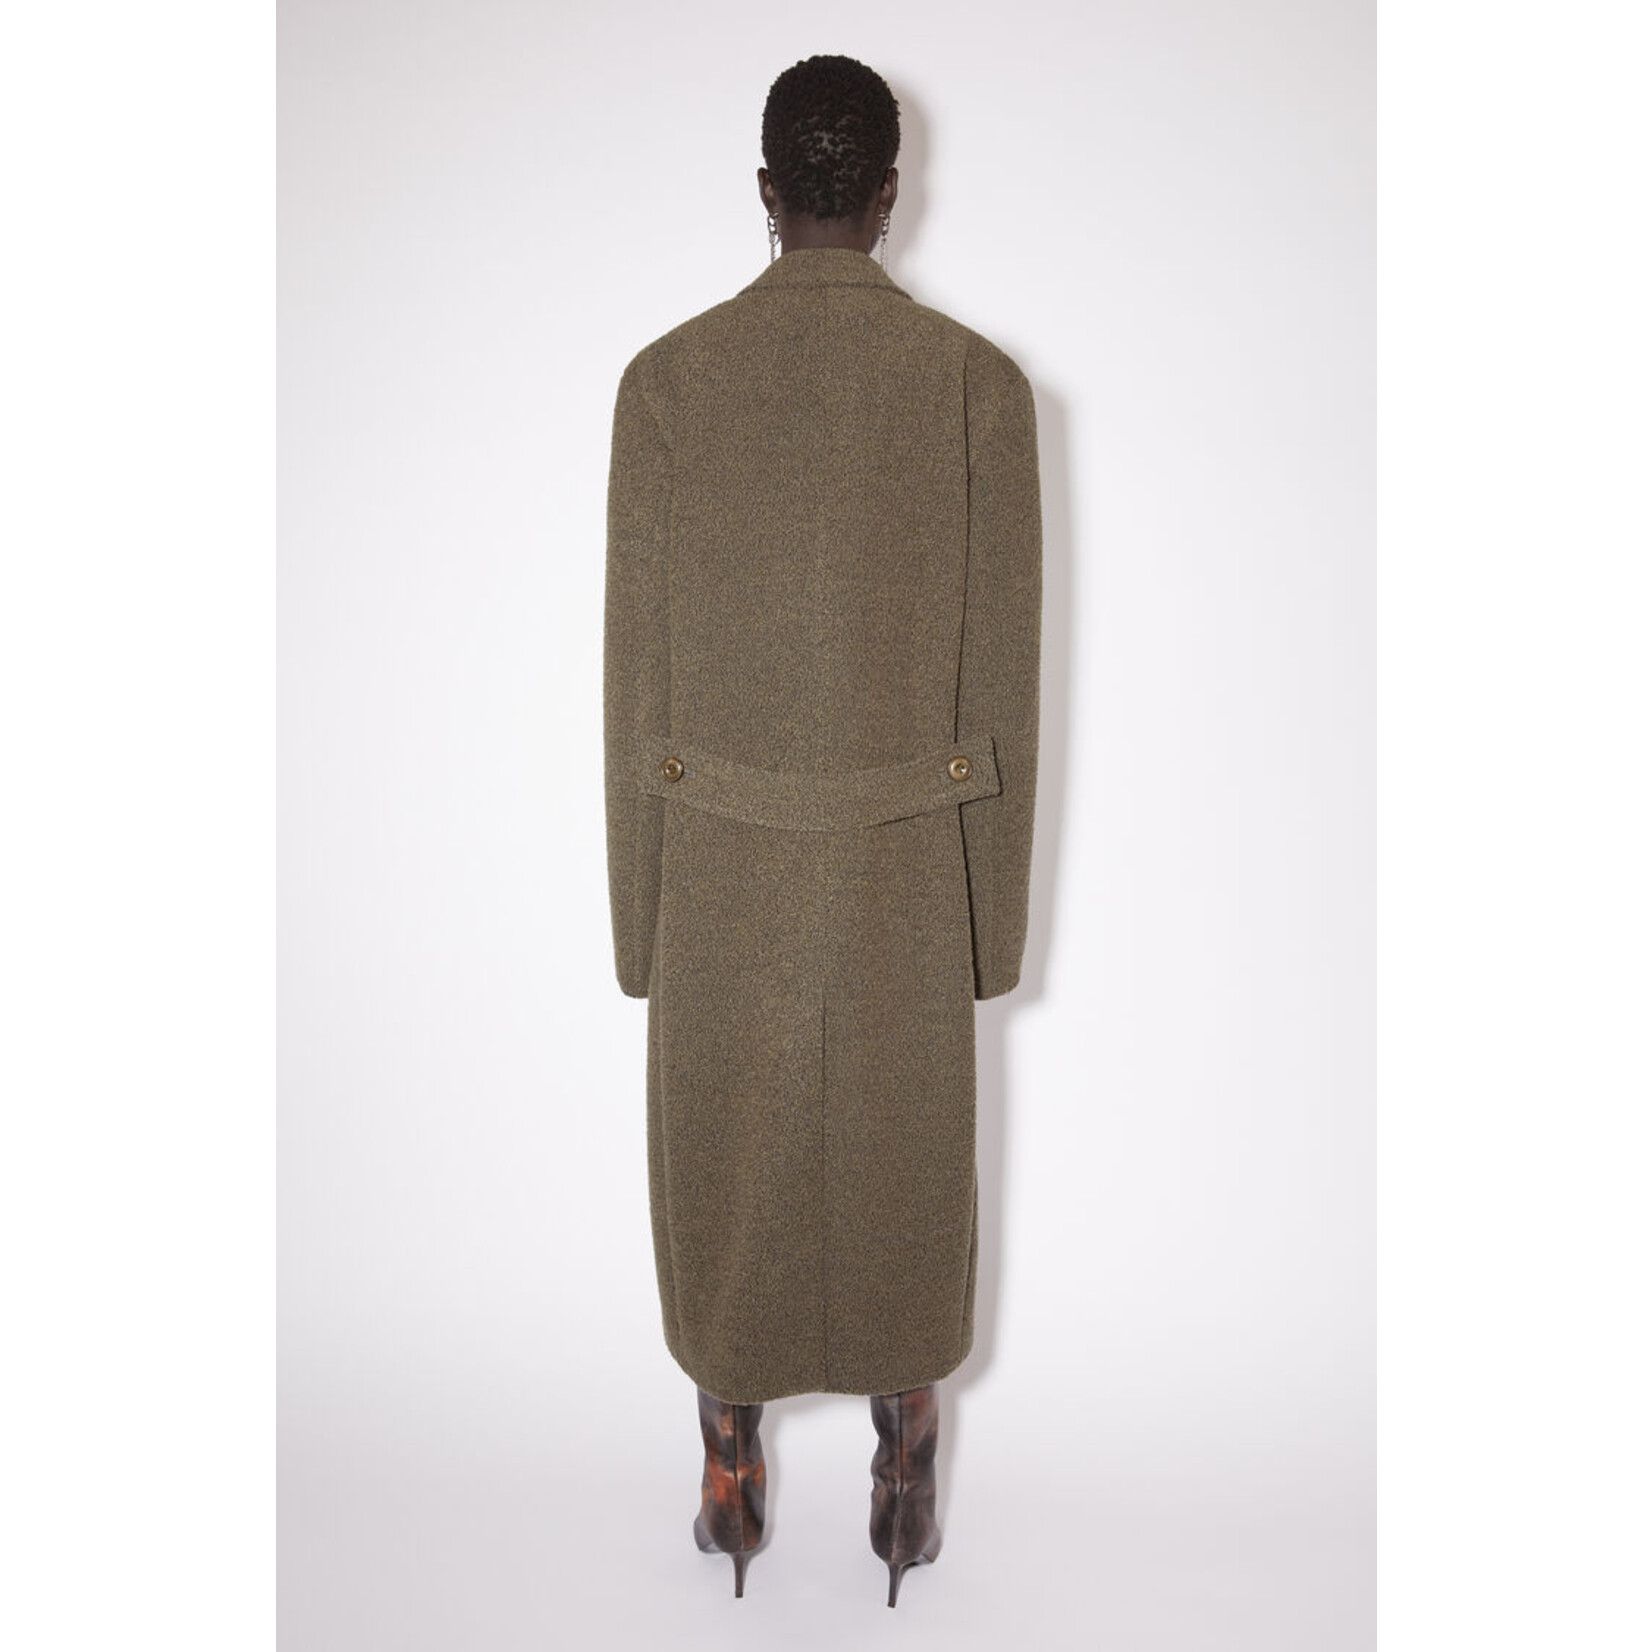 Acne Studios Acnestudios wool coat , taupe grey